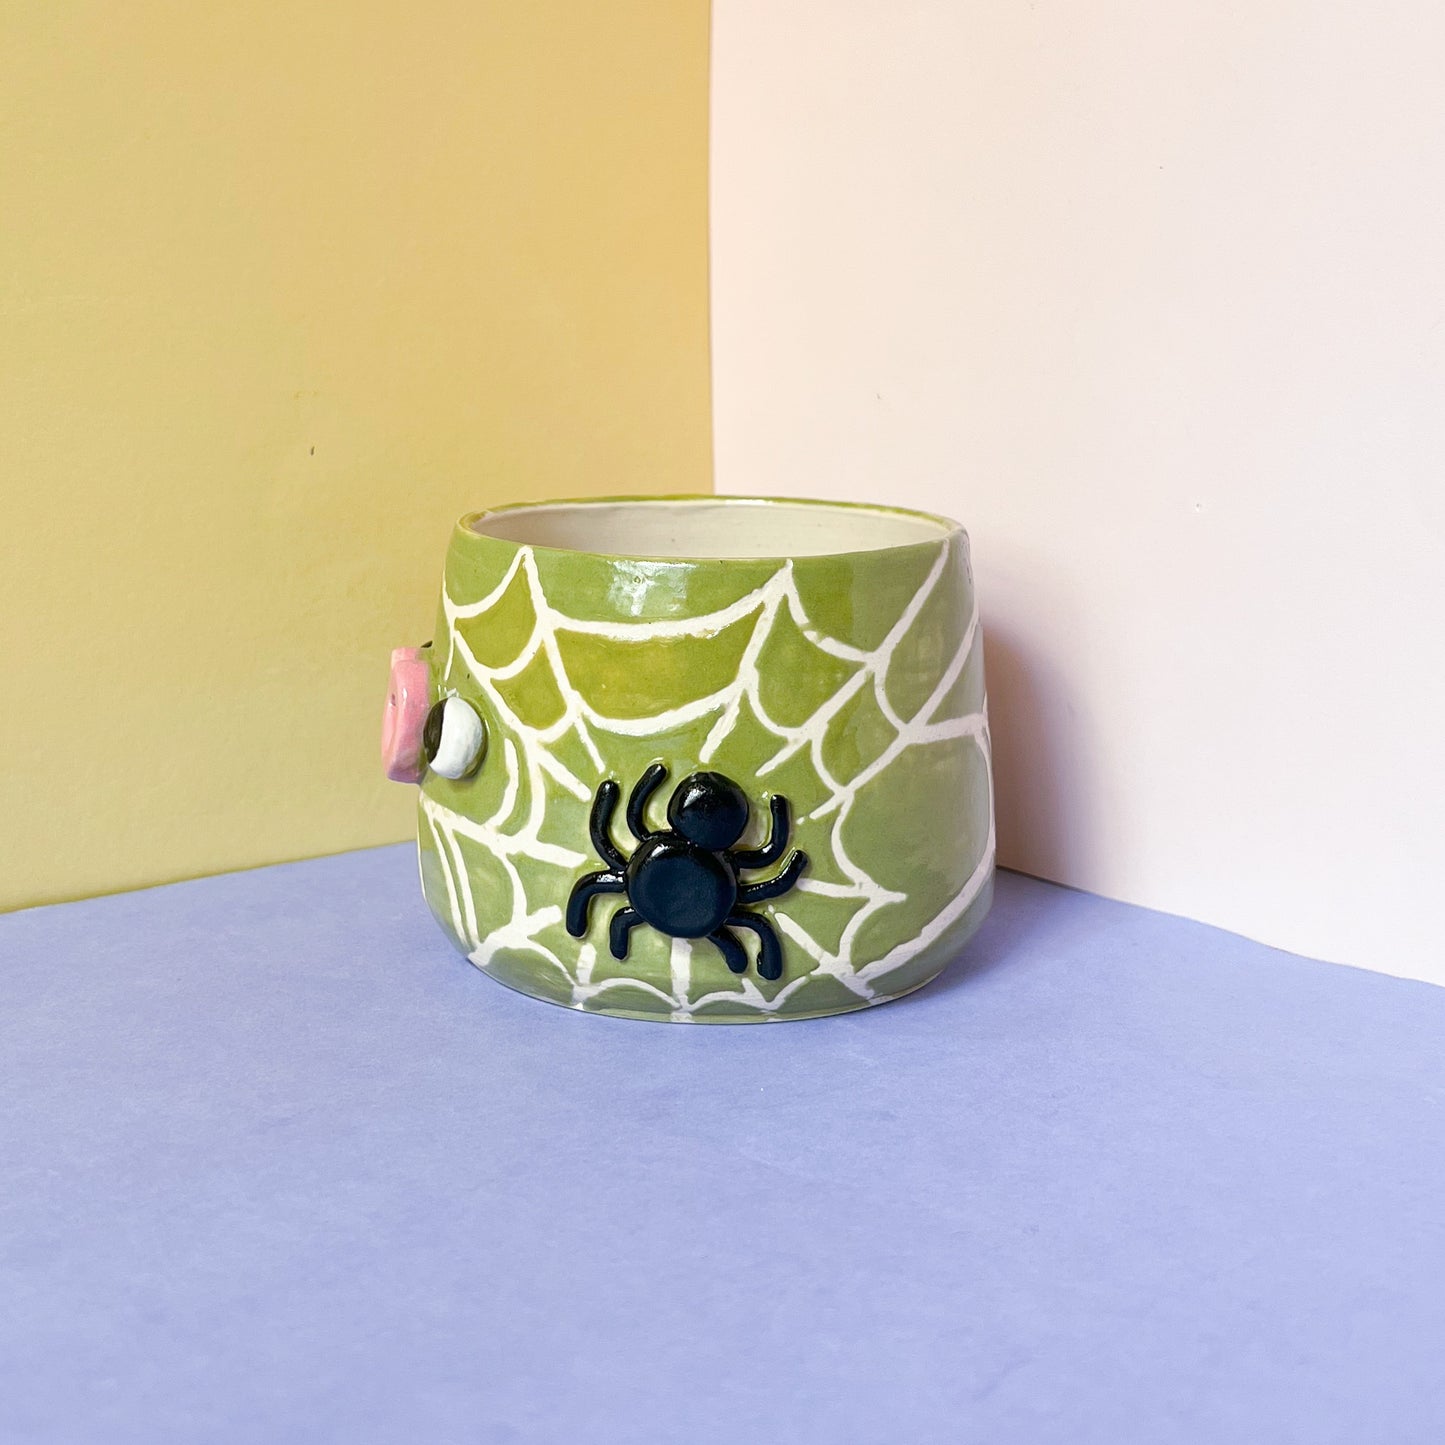 Spider mug